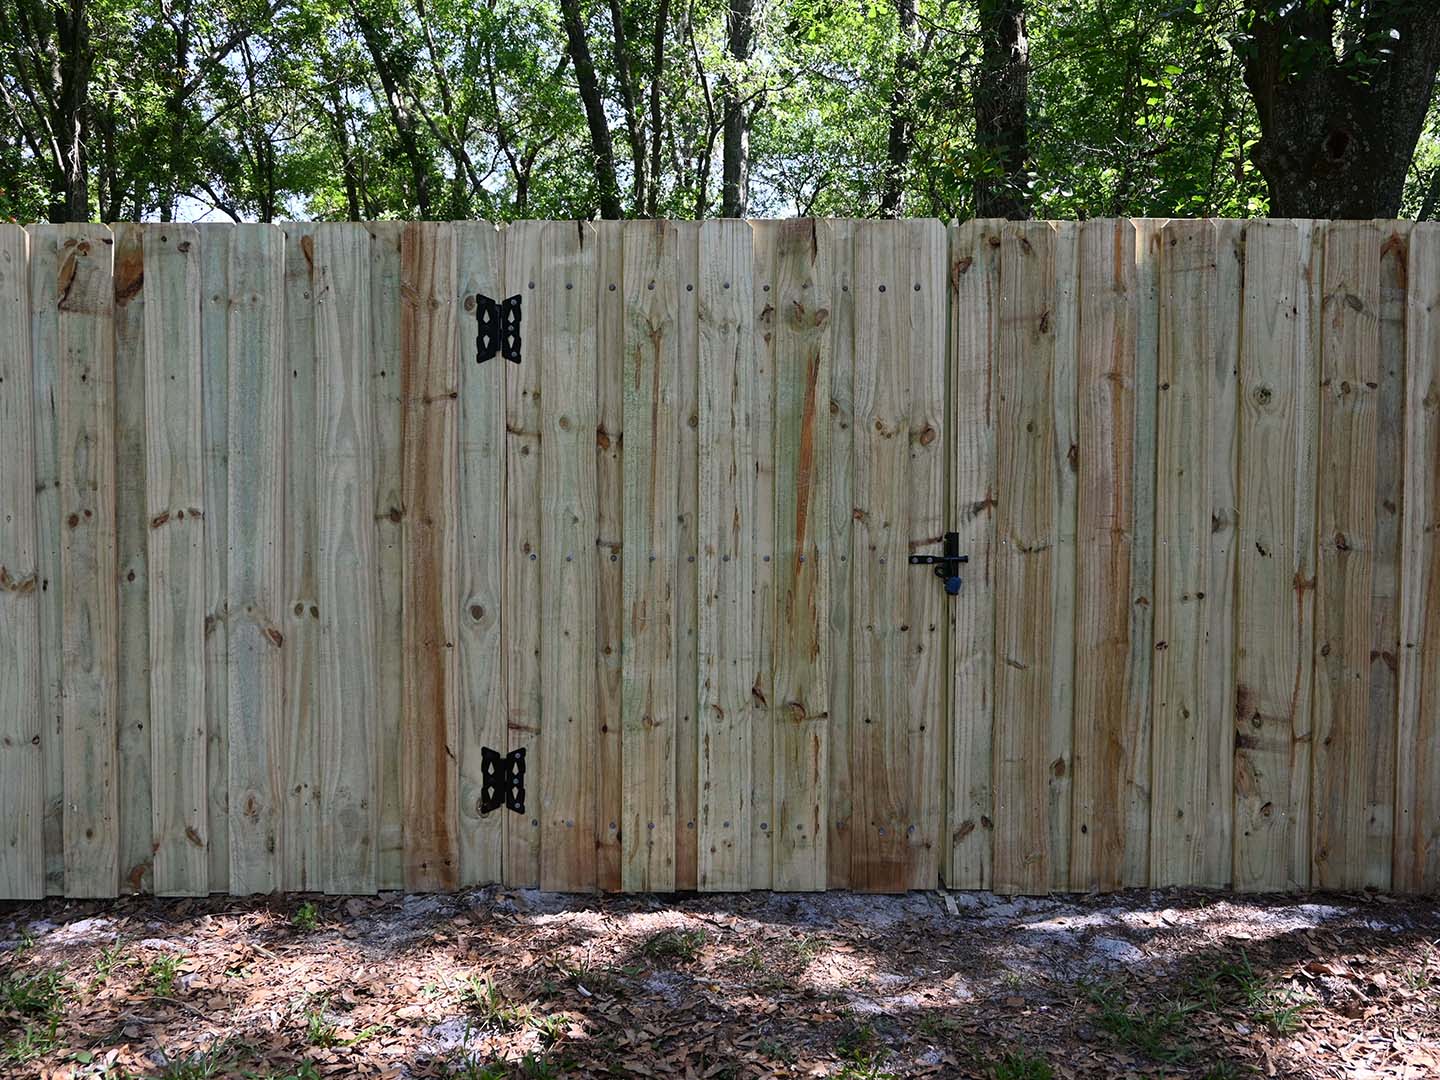 Tampa Florida Board on board fence installation company